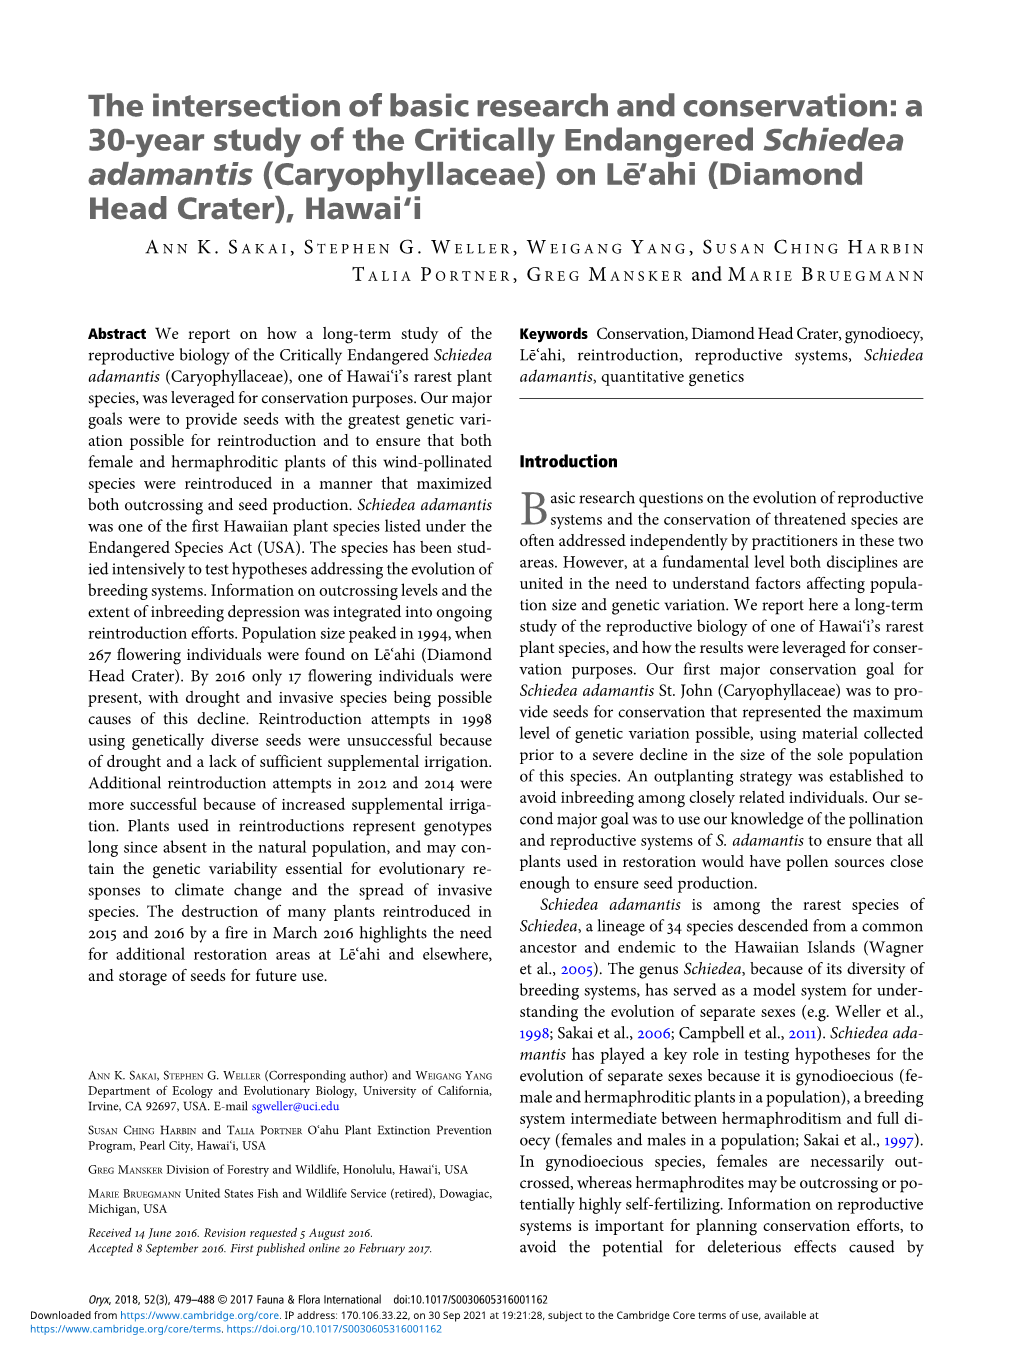 A 30-Year Study of the Critically Endangered Schiedea Adamantis (Caryophyllaceae) on Le¯‘Ahi (Diamond Head Crater), Hawai‘I